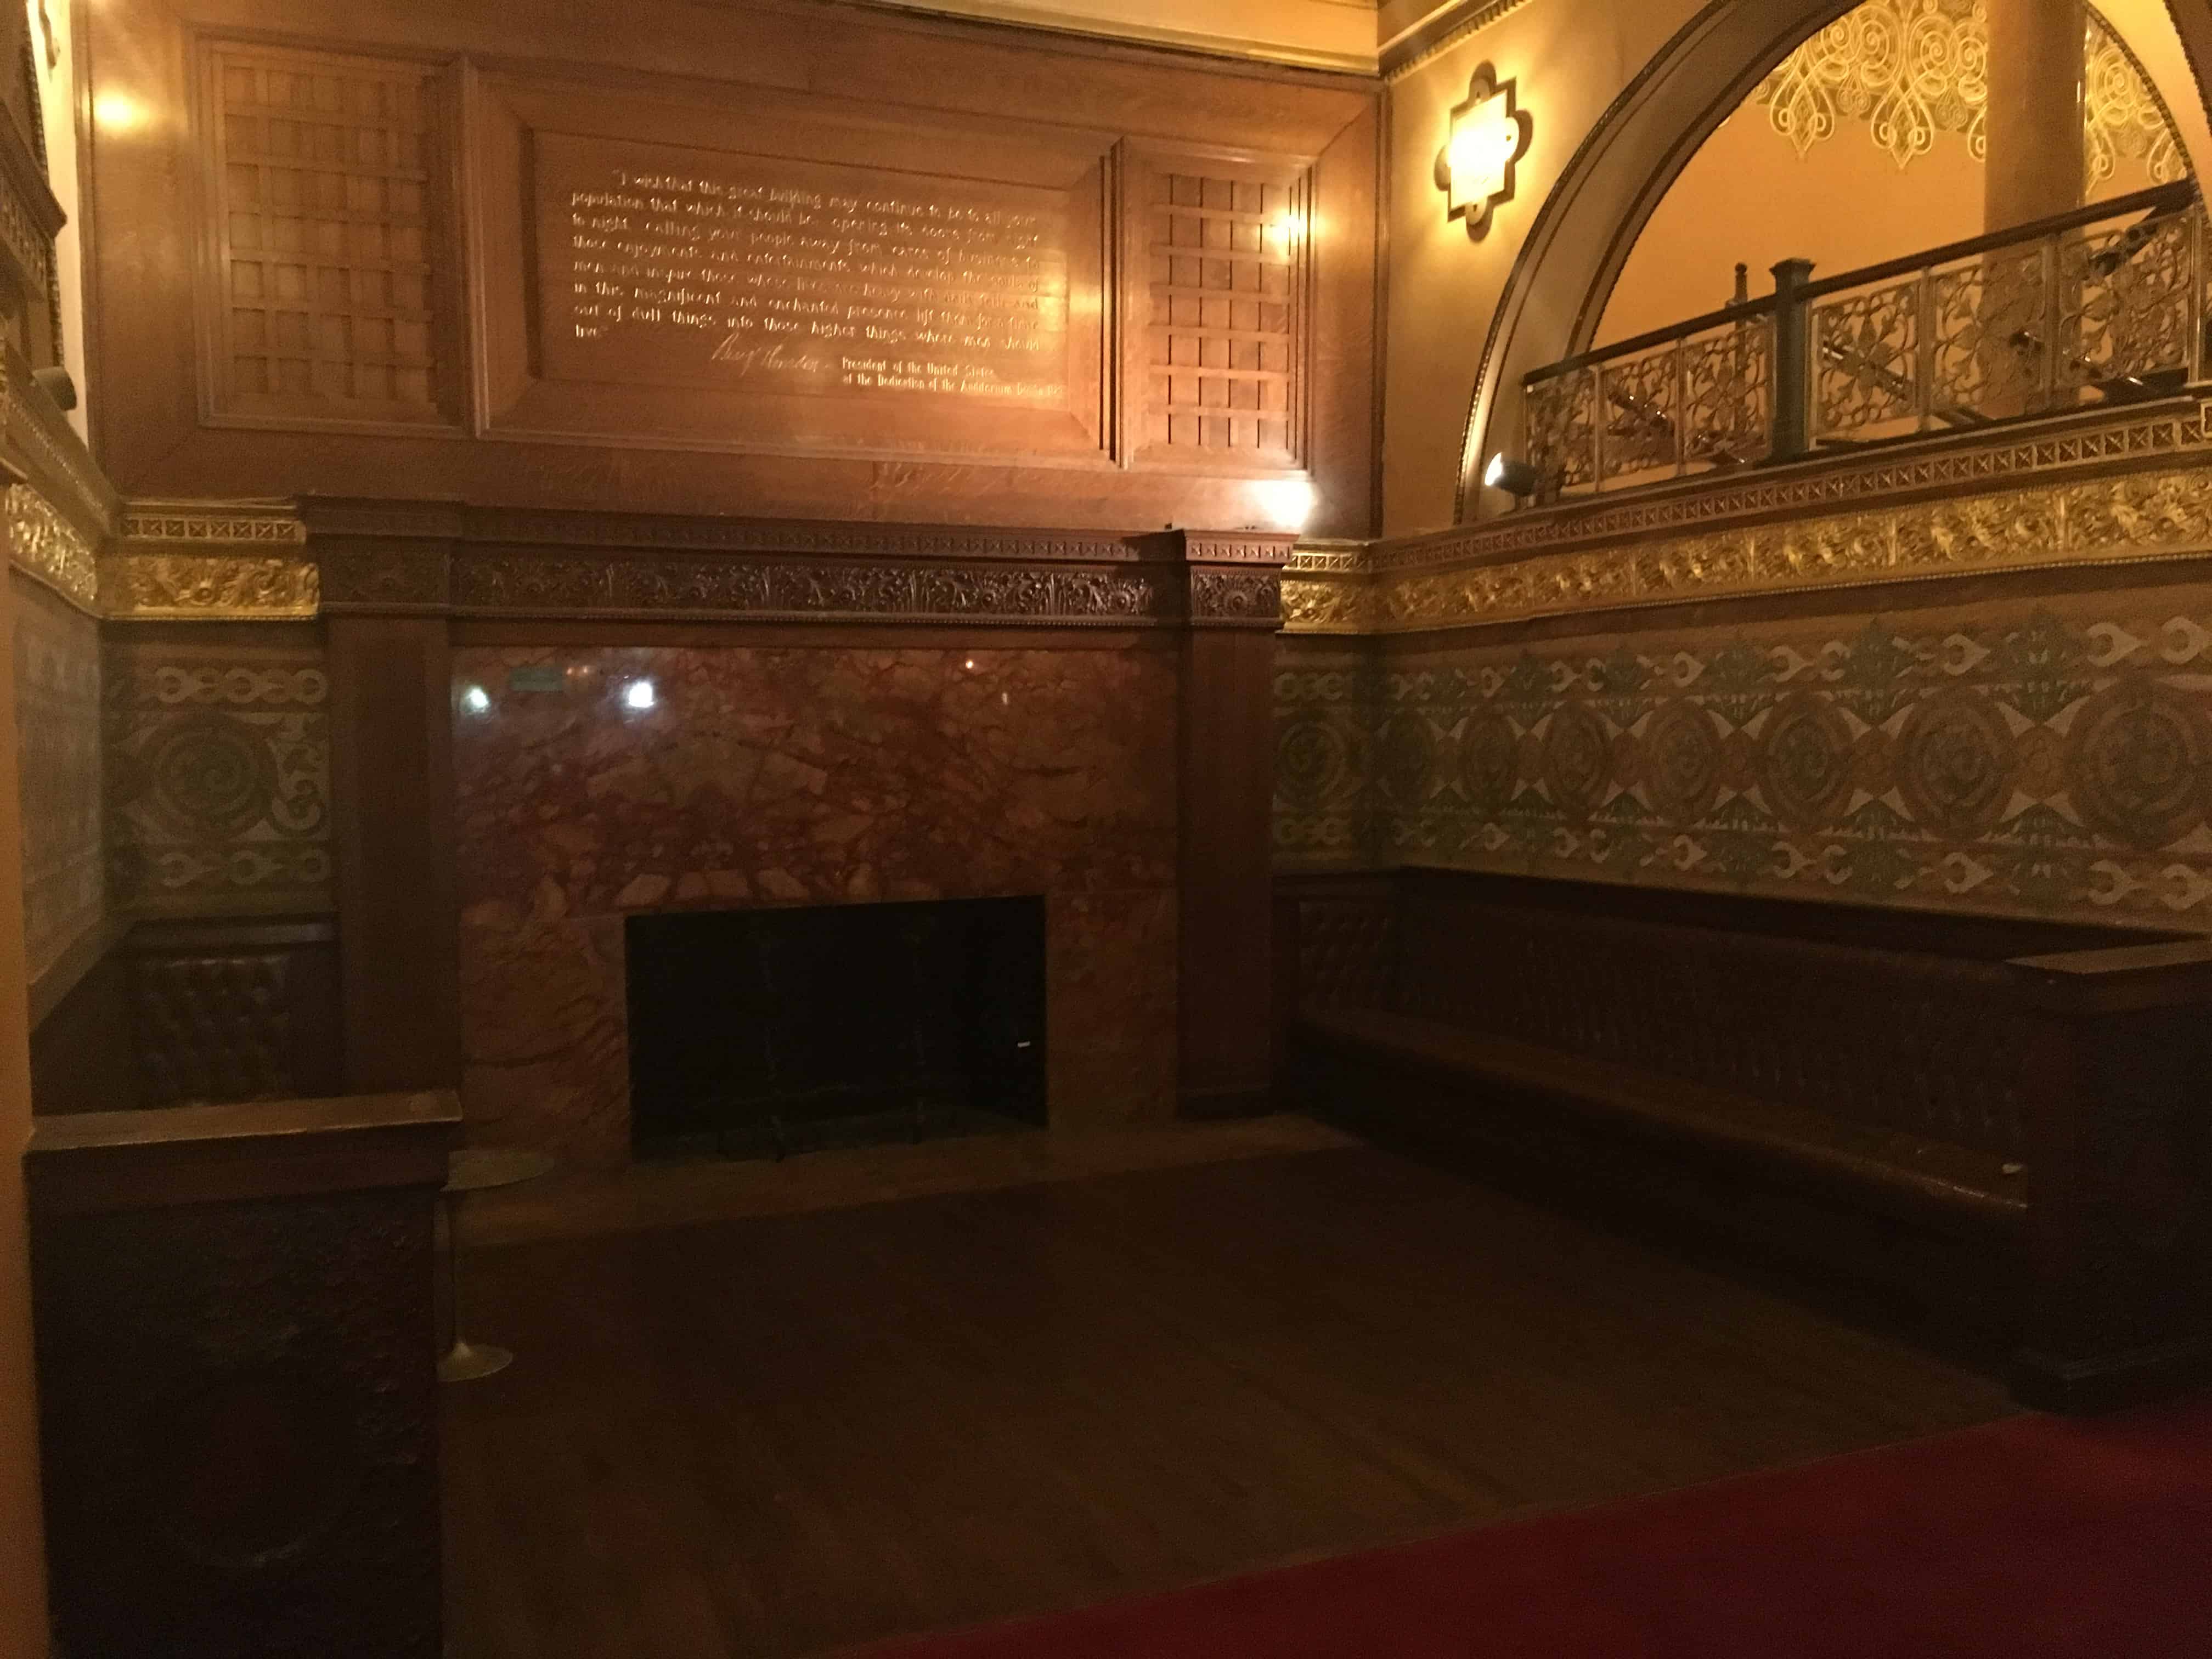 Fireplace in the Auditorium Theatre in Chicago, Illinois